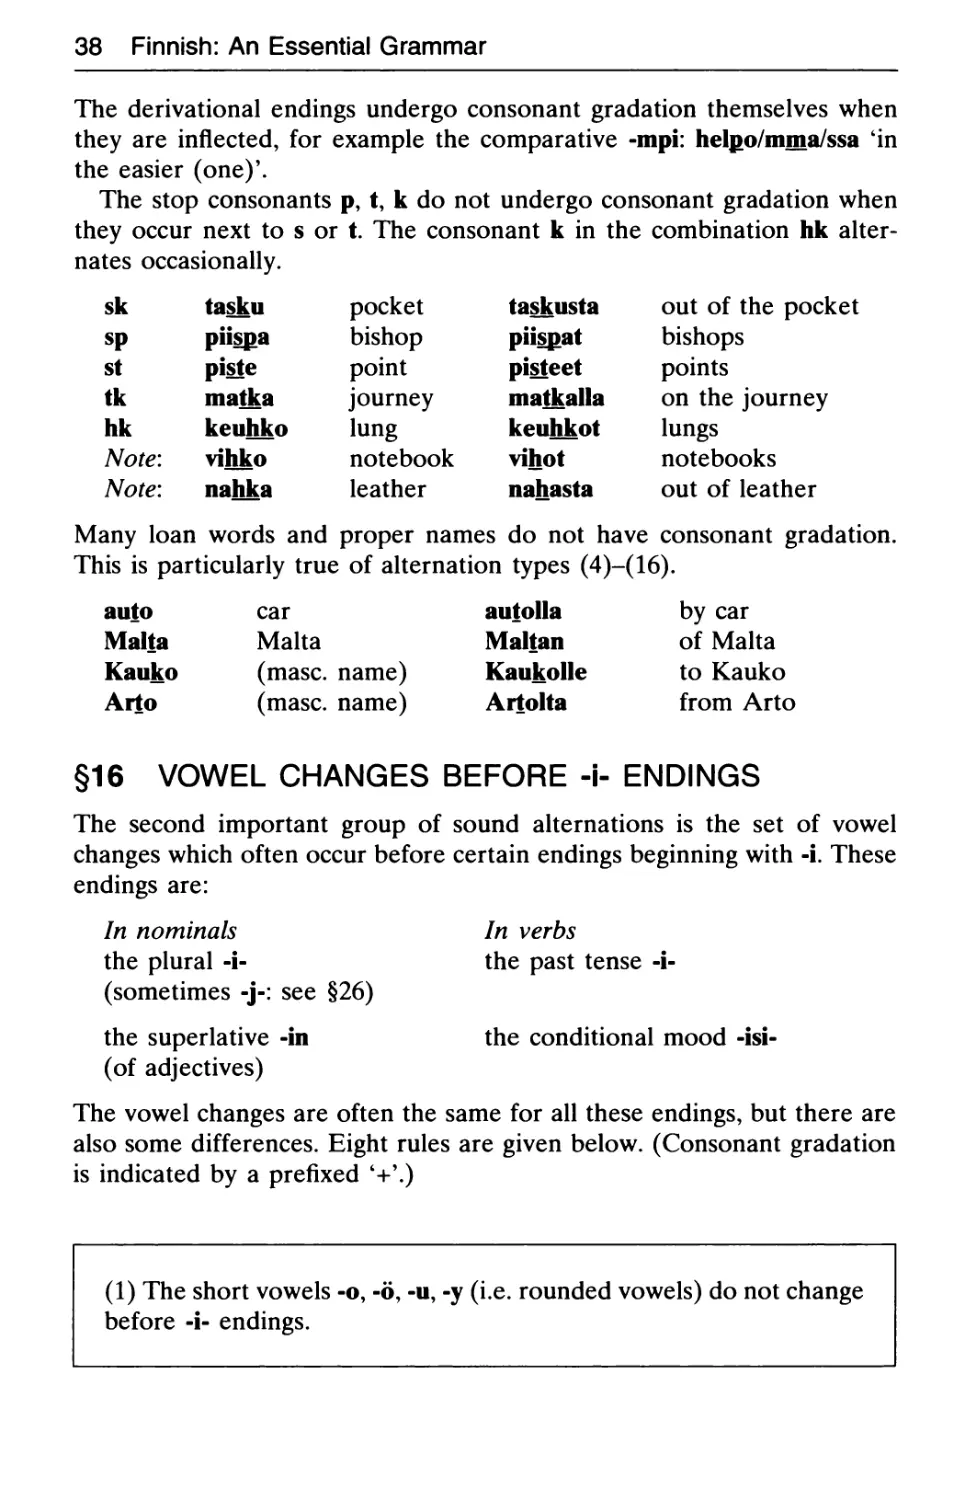 §16 Vowel changes before -i- endings